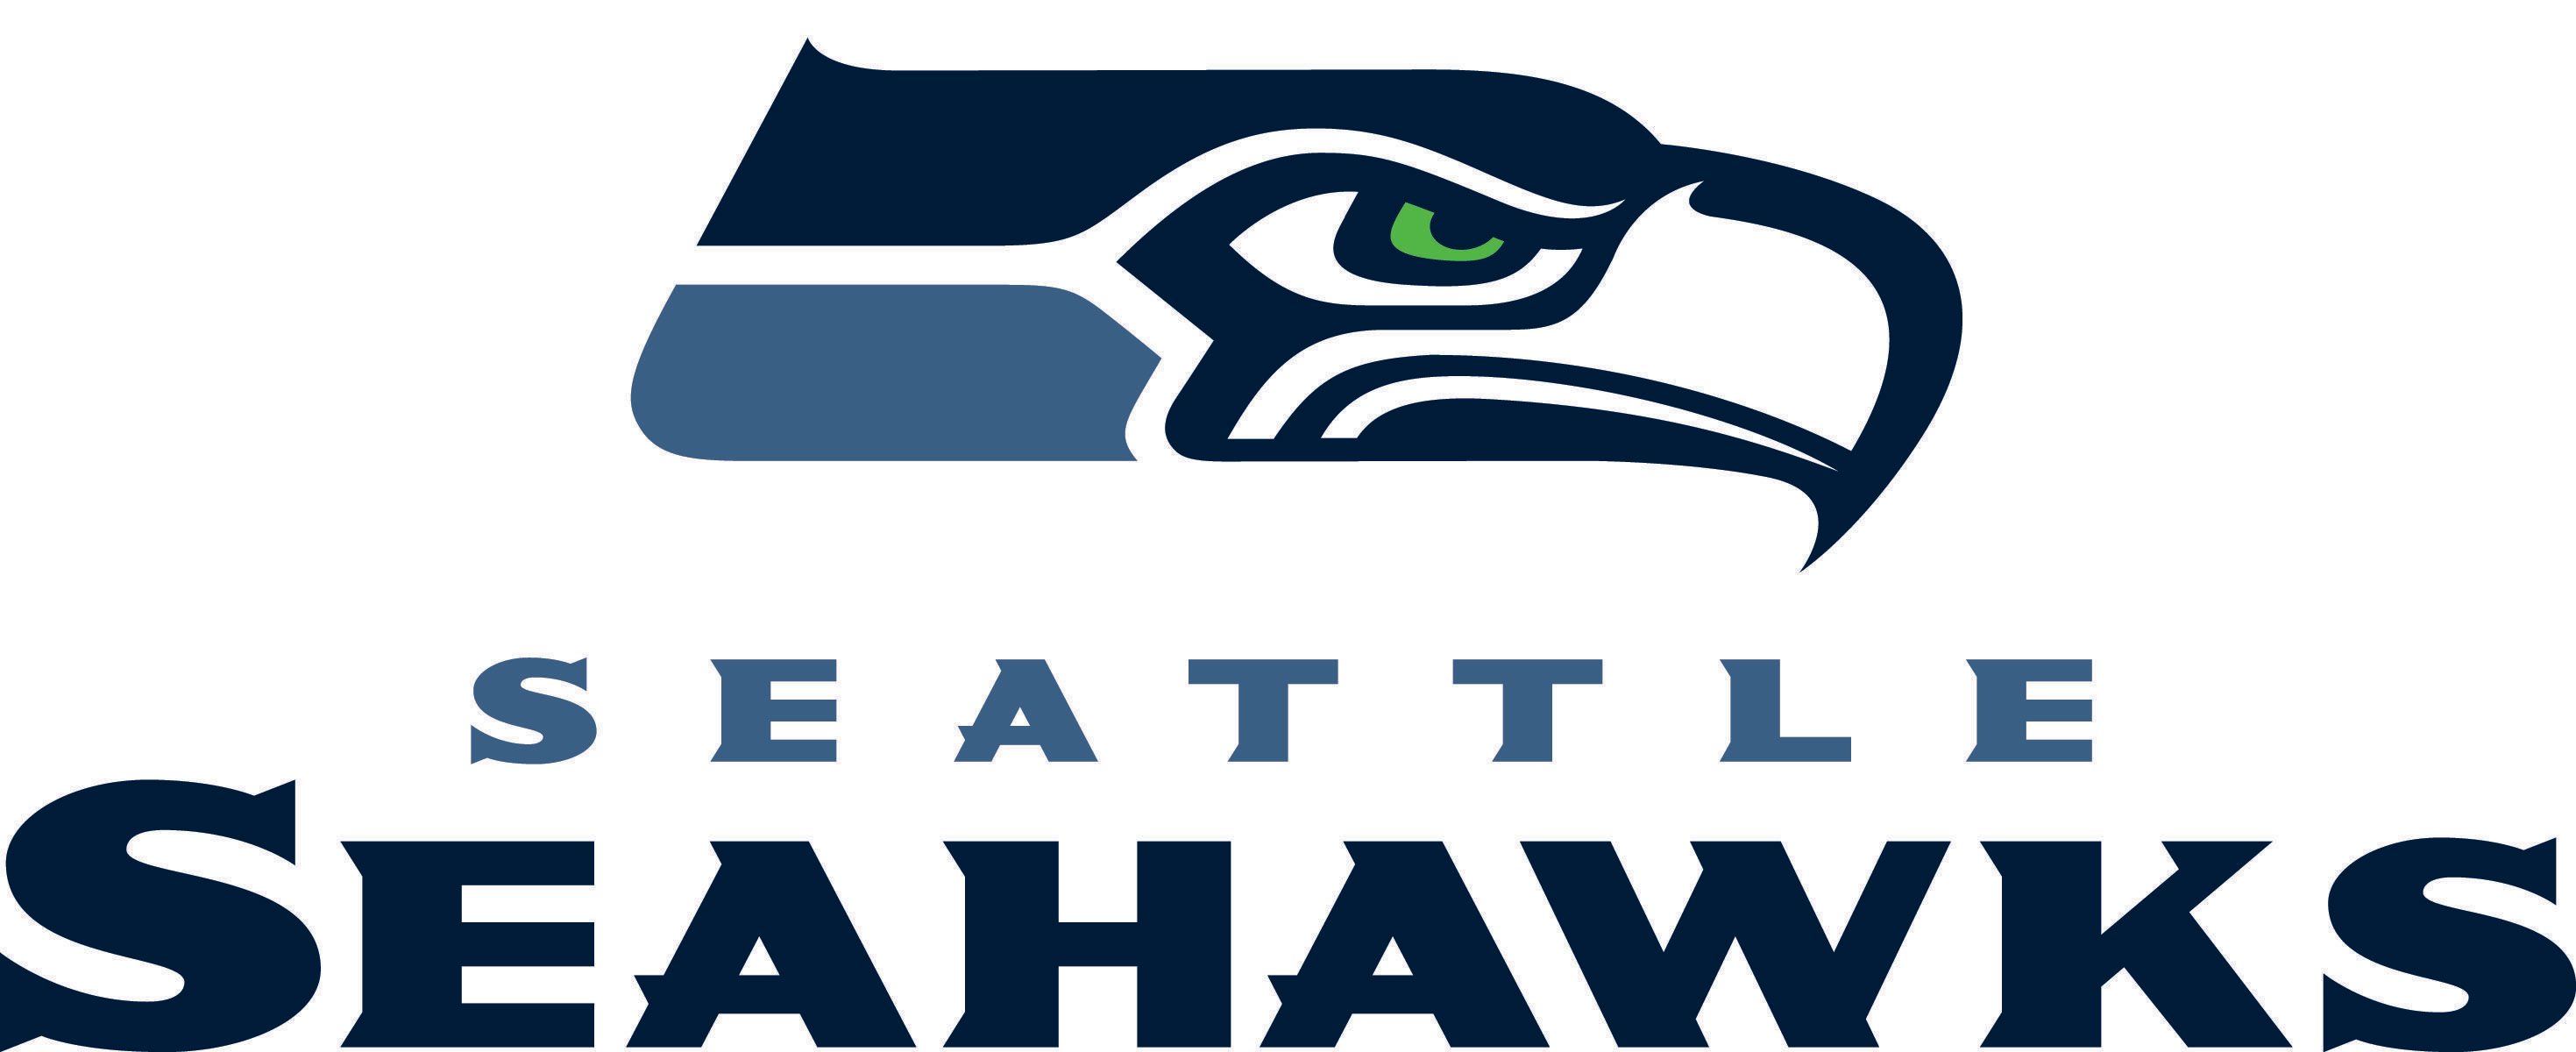 Go Hawks Logo - Go hawks Logos